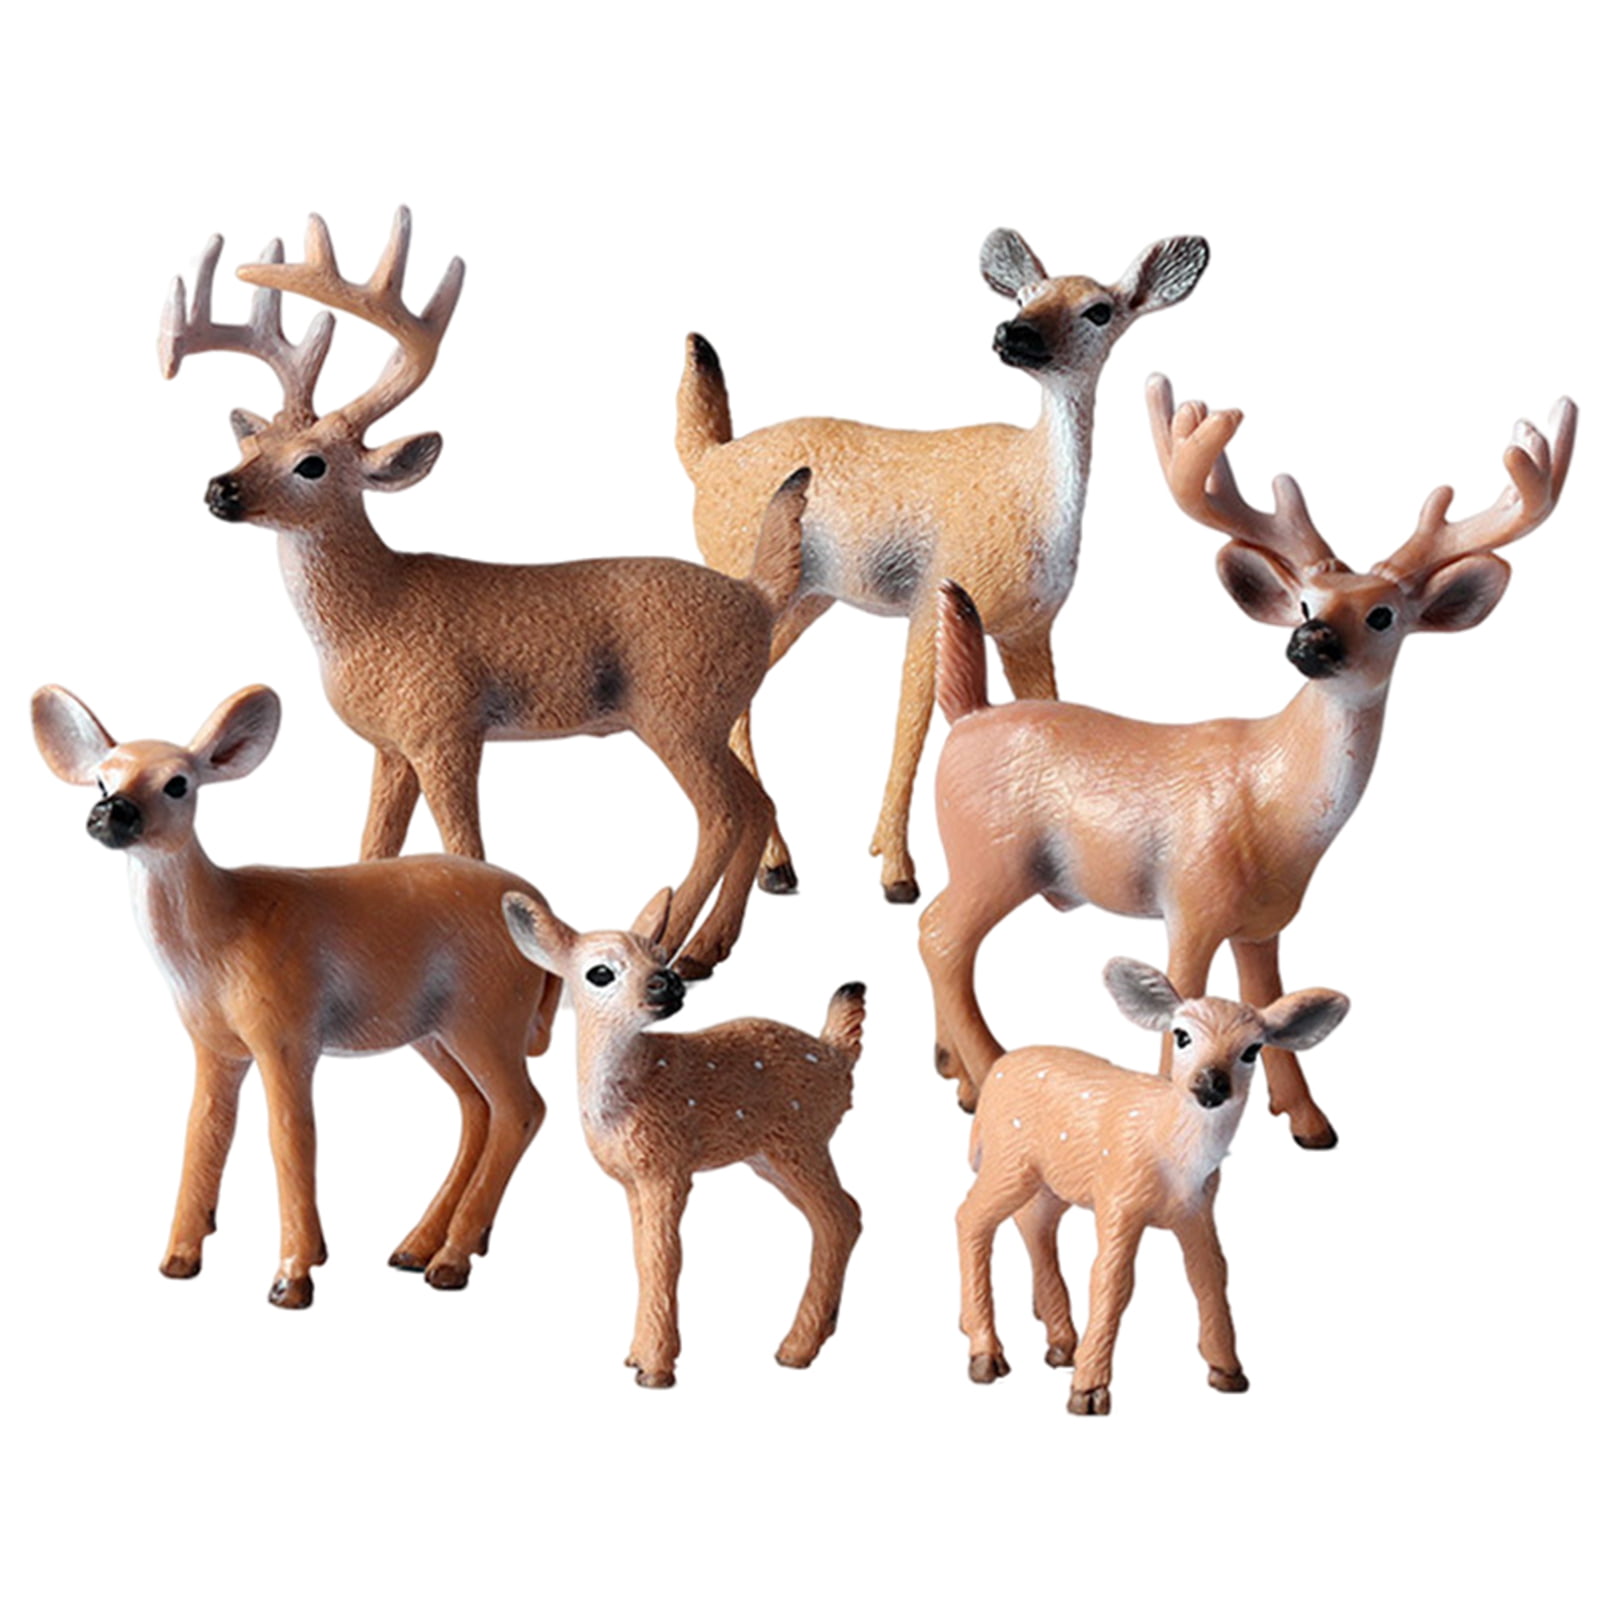 Sika Deer Figurine Animal Figurine sika Deer Toy Cake Decoration Birthday Gift Party Decoration 6 Deer Figurine Toys